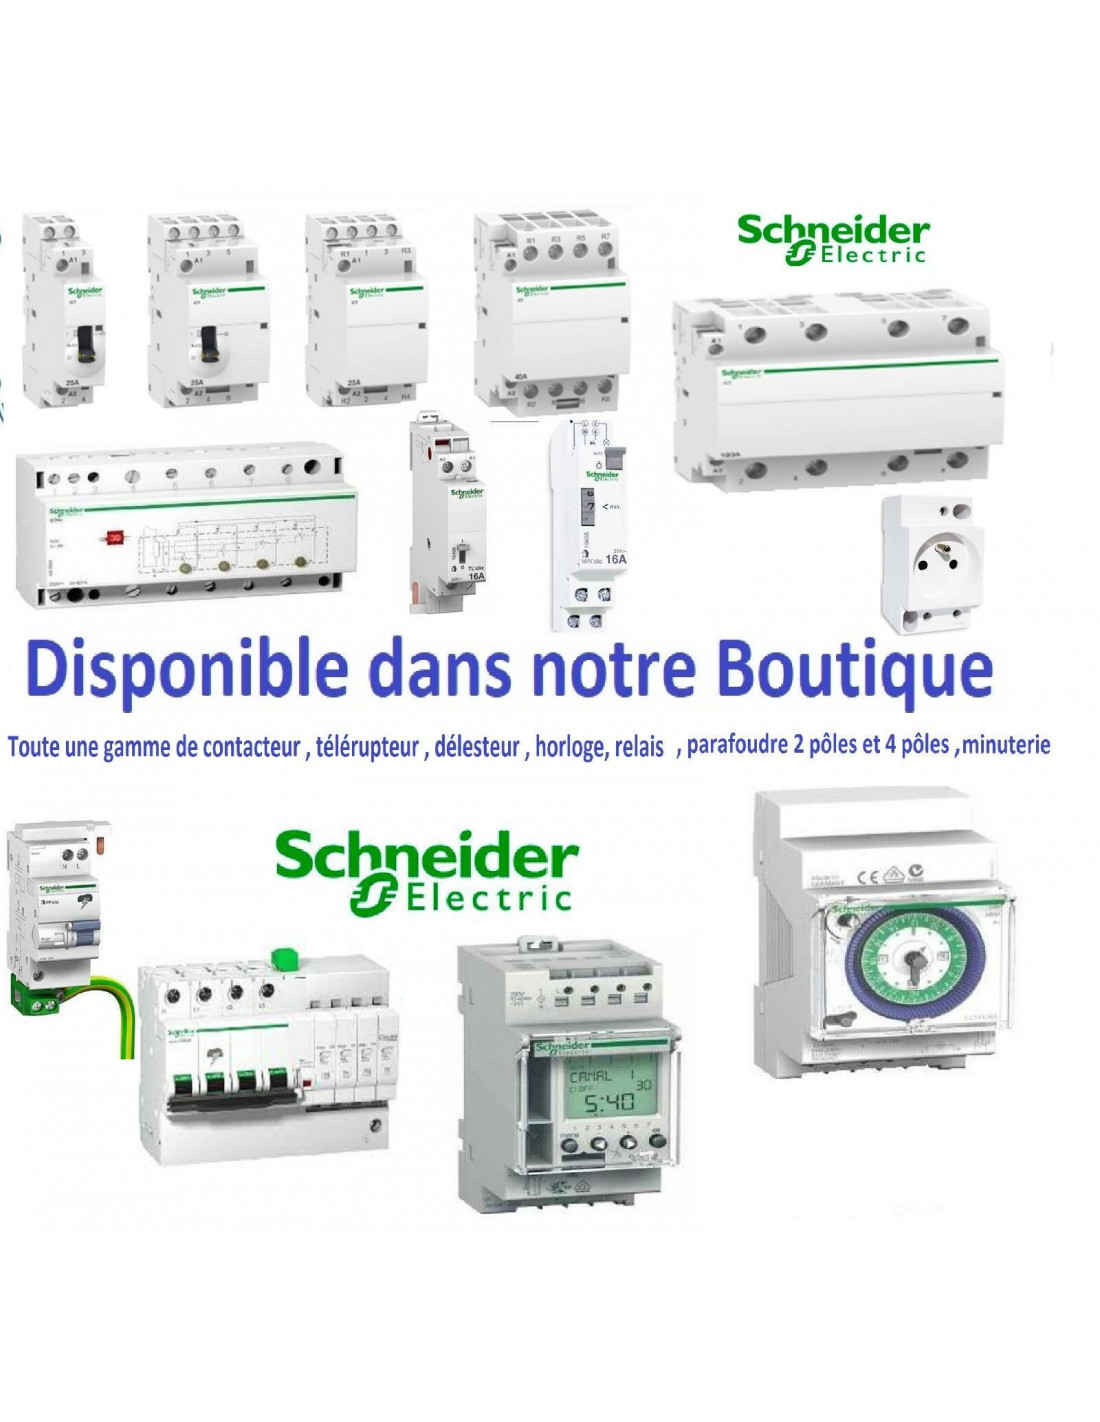 SCHNEIDER Wiser Compteur D'énergie + 5TC - EER39000 - DiscountElec